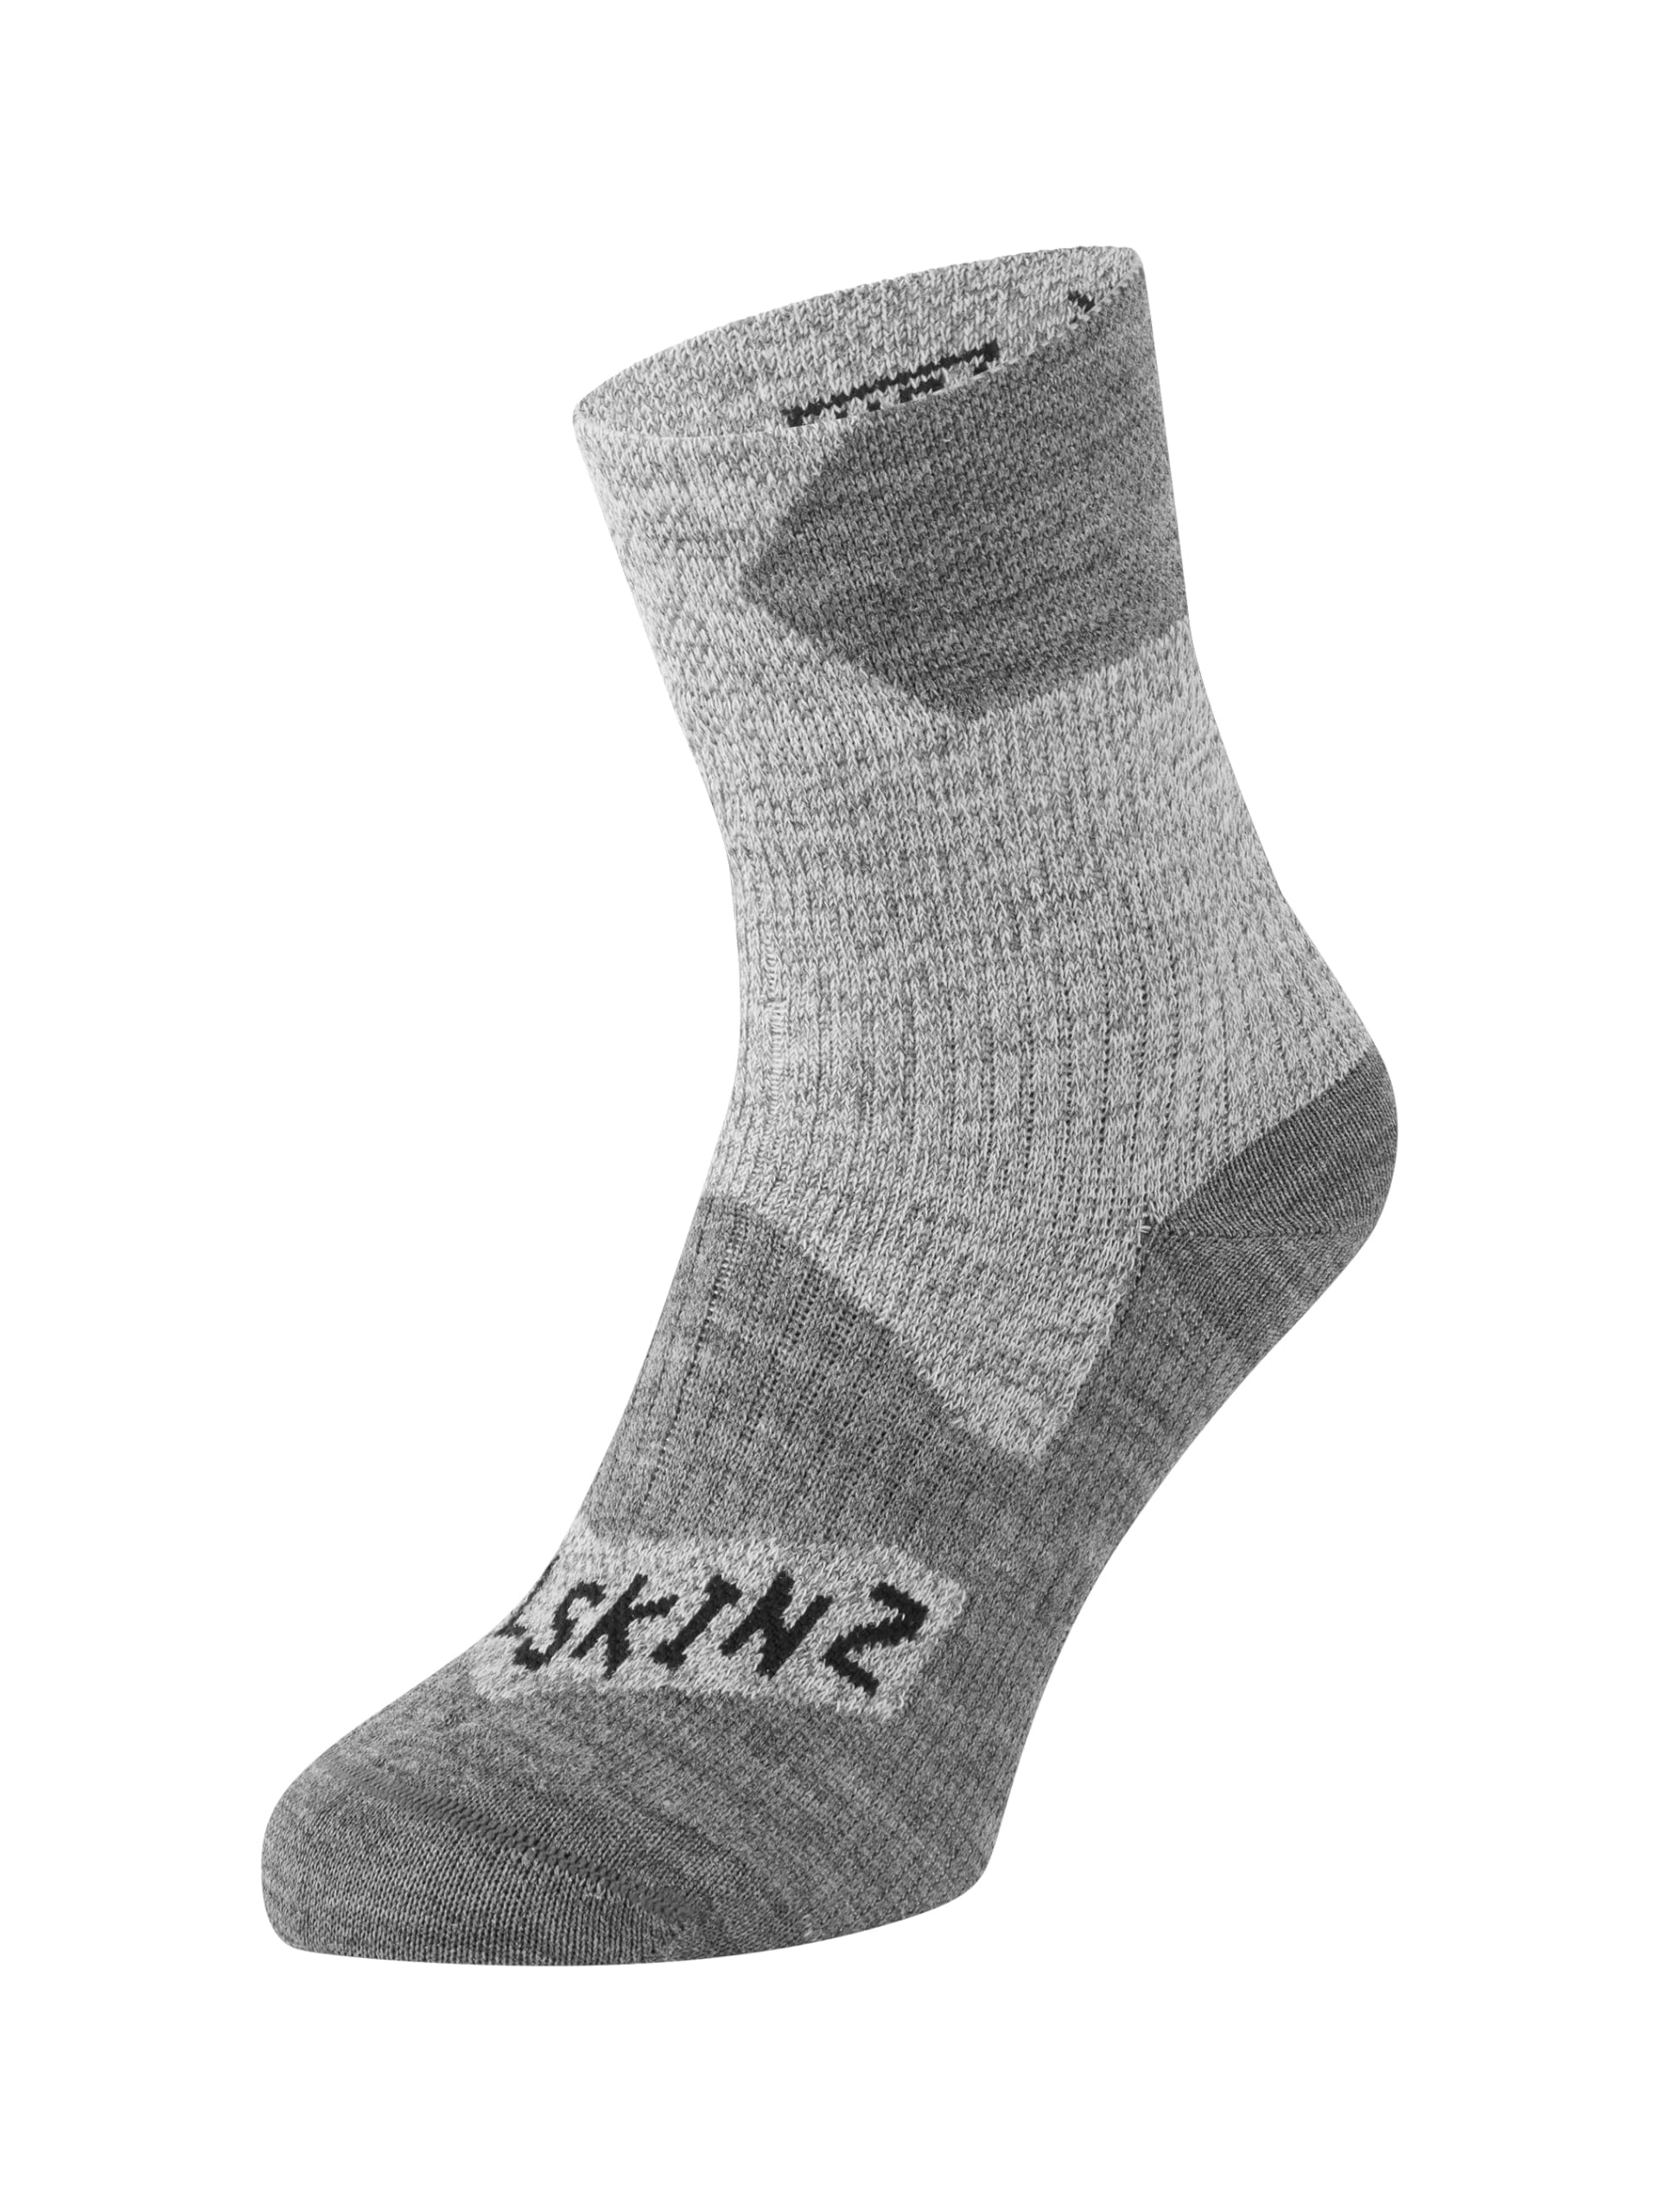 Sealskinz Unisex Allwetter Wasserdichte Socken – Knöchellang, Grau, L